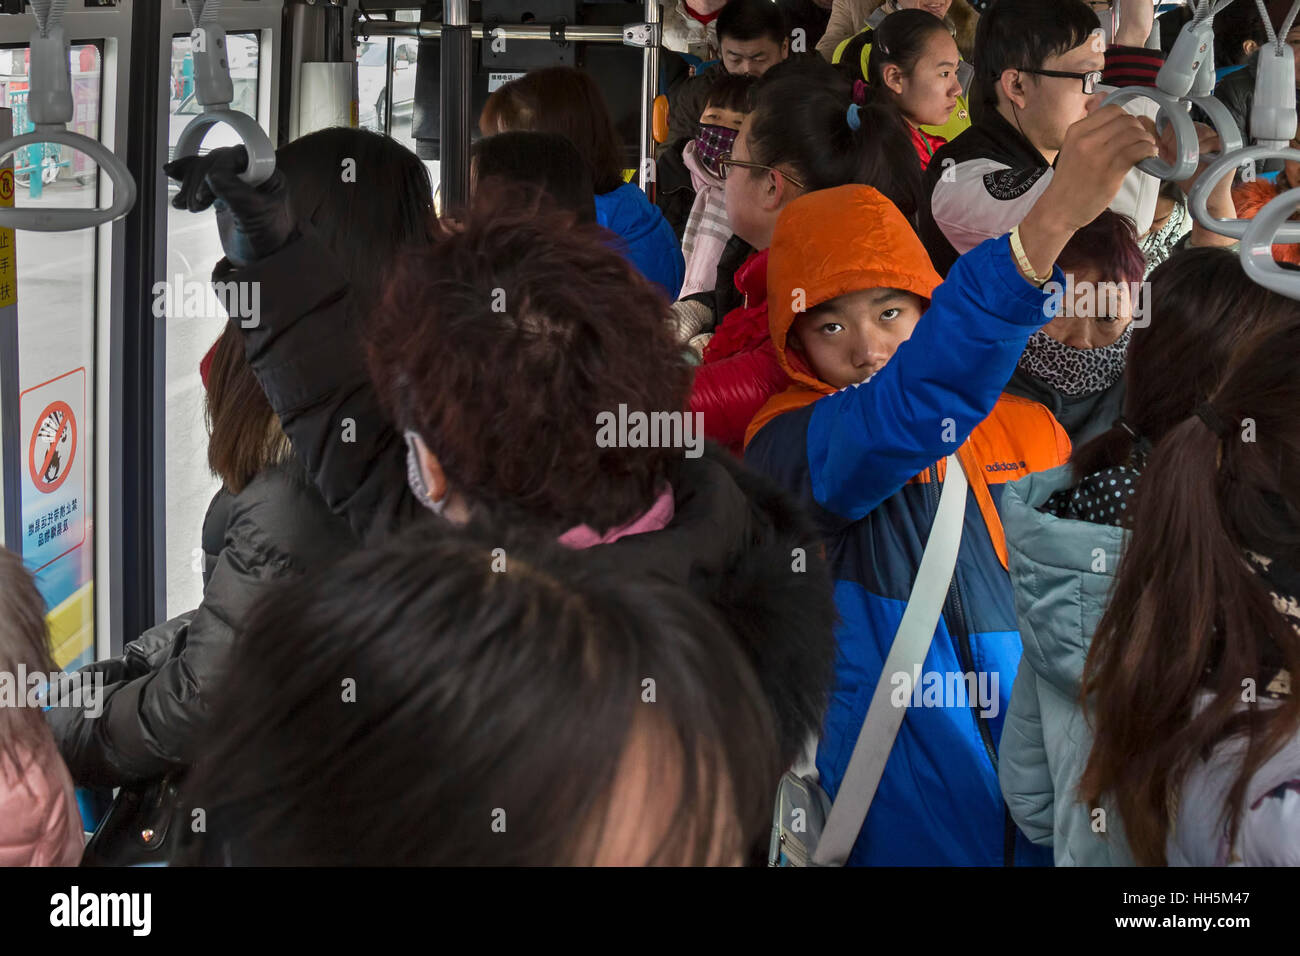 Passengers on a bus, Yinchuan, Ningxia province, China Stock Photo